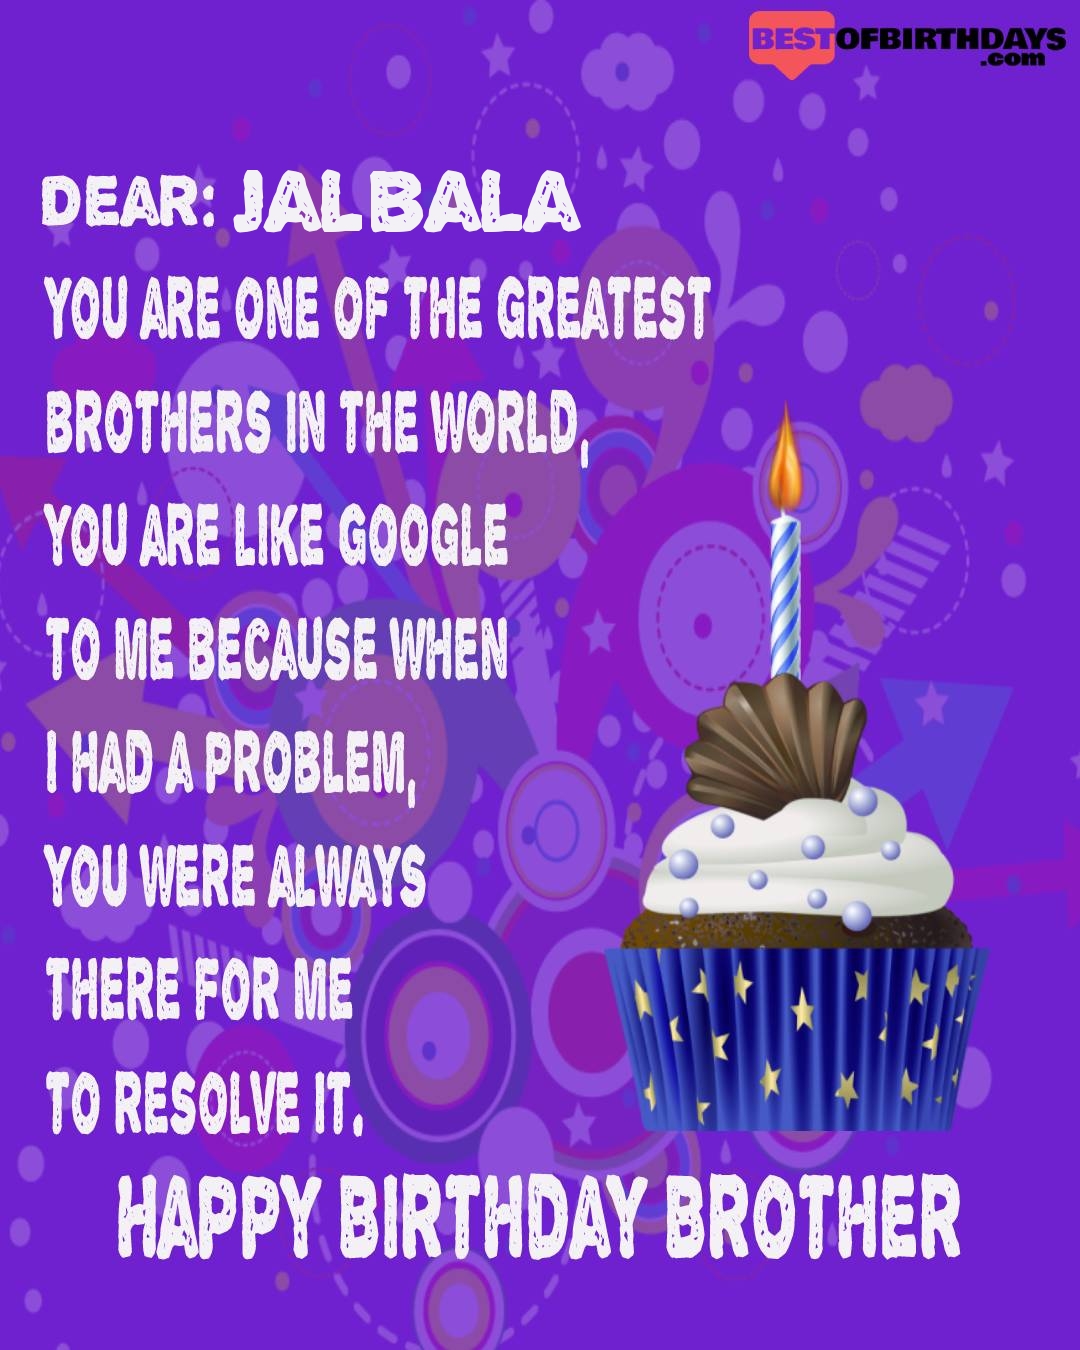 Happy birthday jalbala bhai brother bro